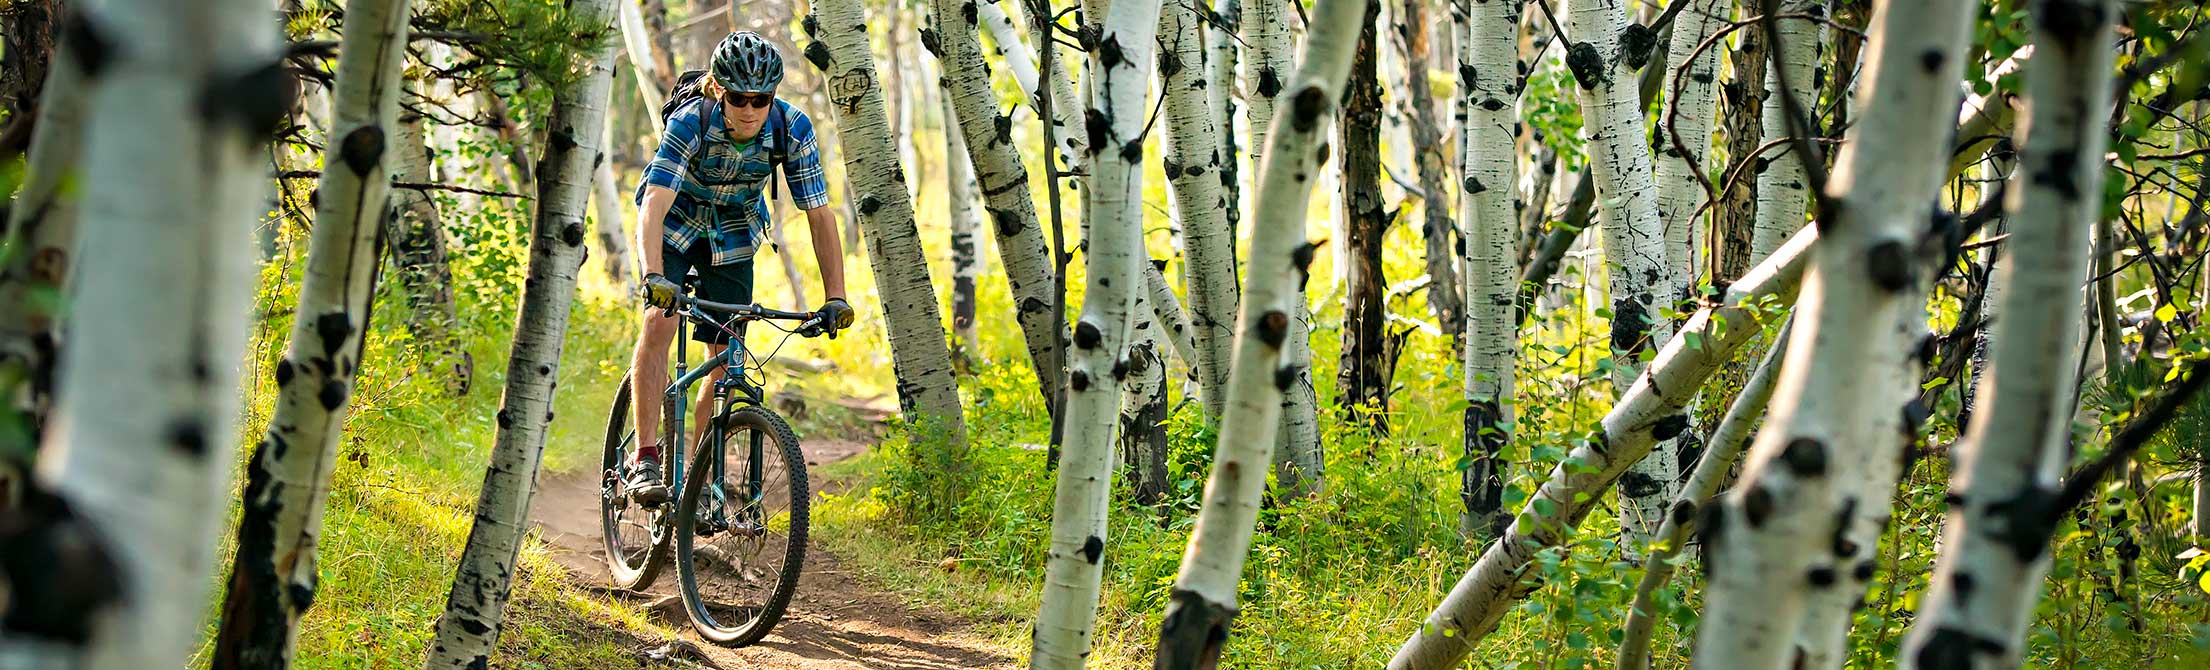 Biker riding through aspen trees in Curt Gowdy